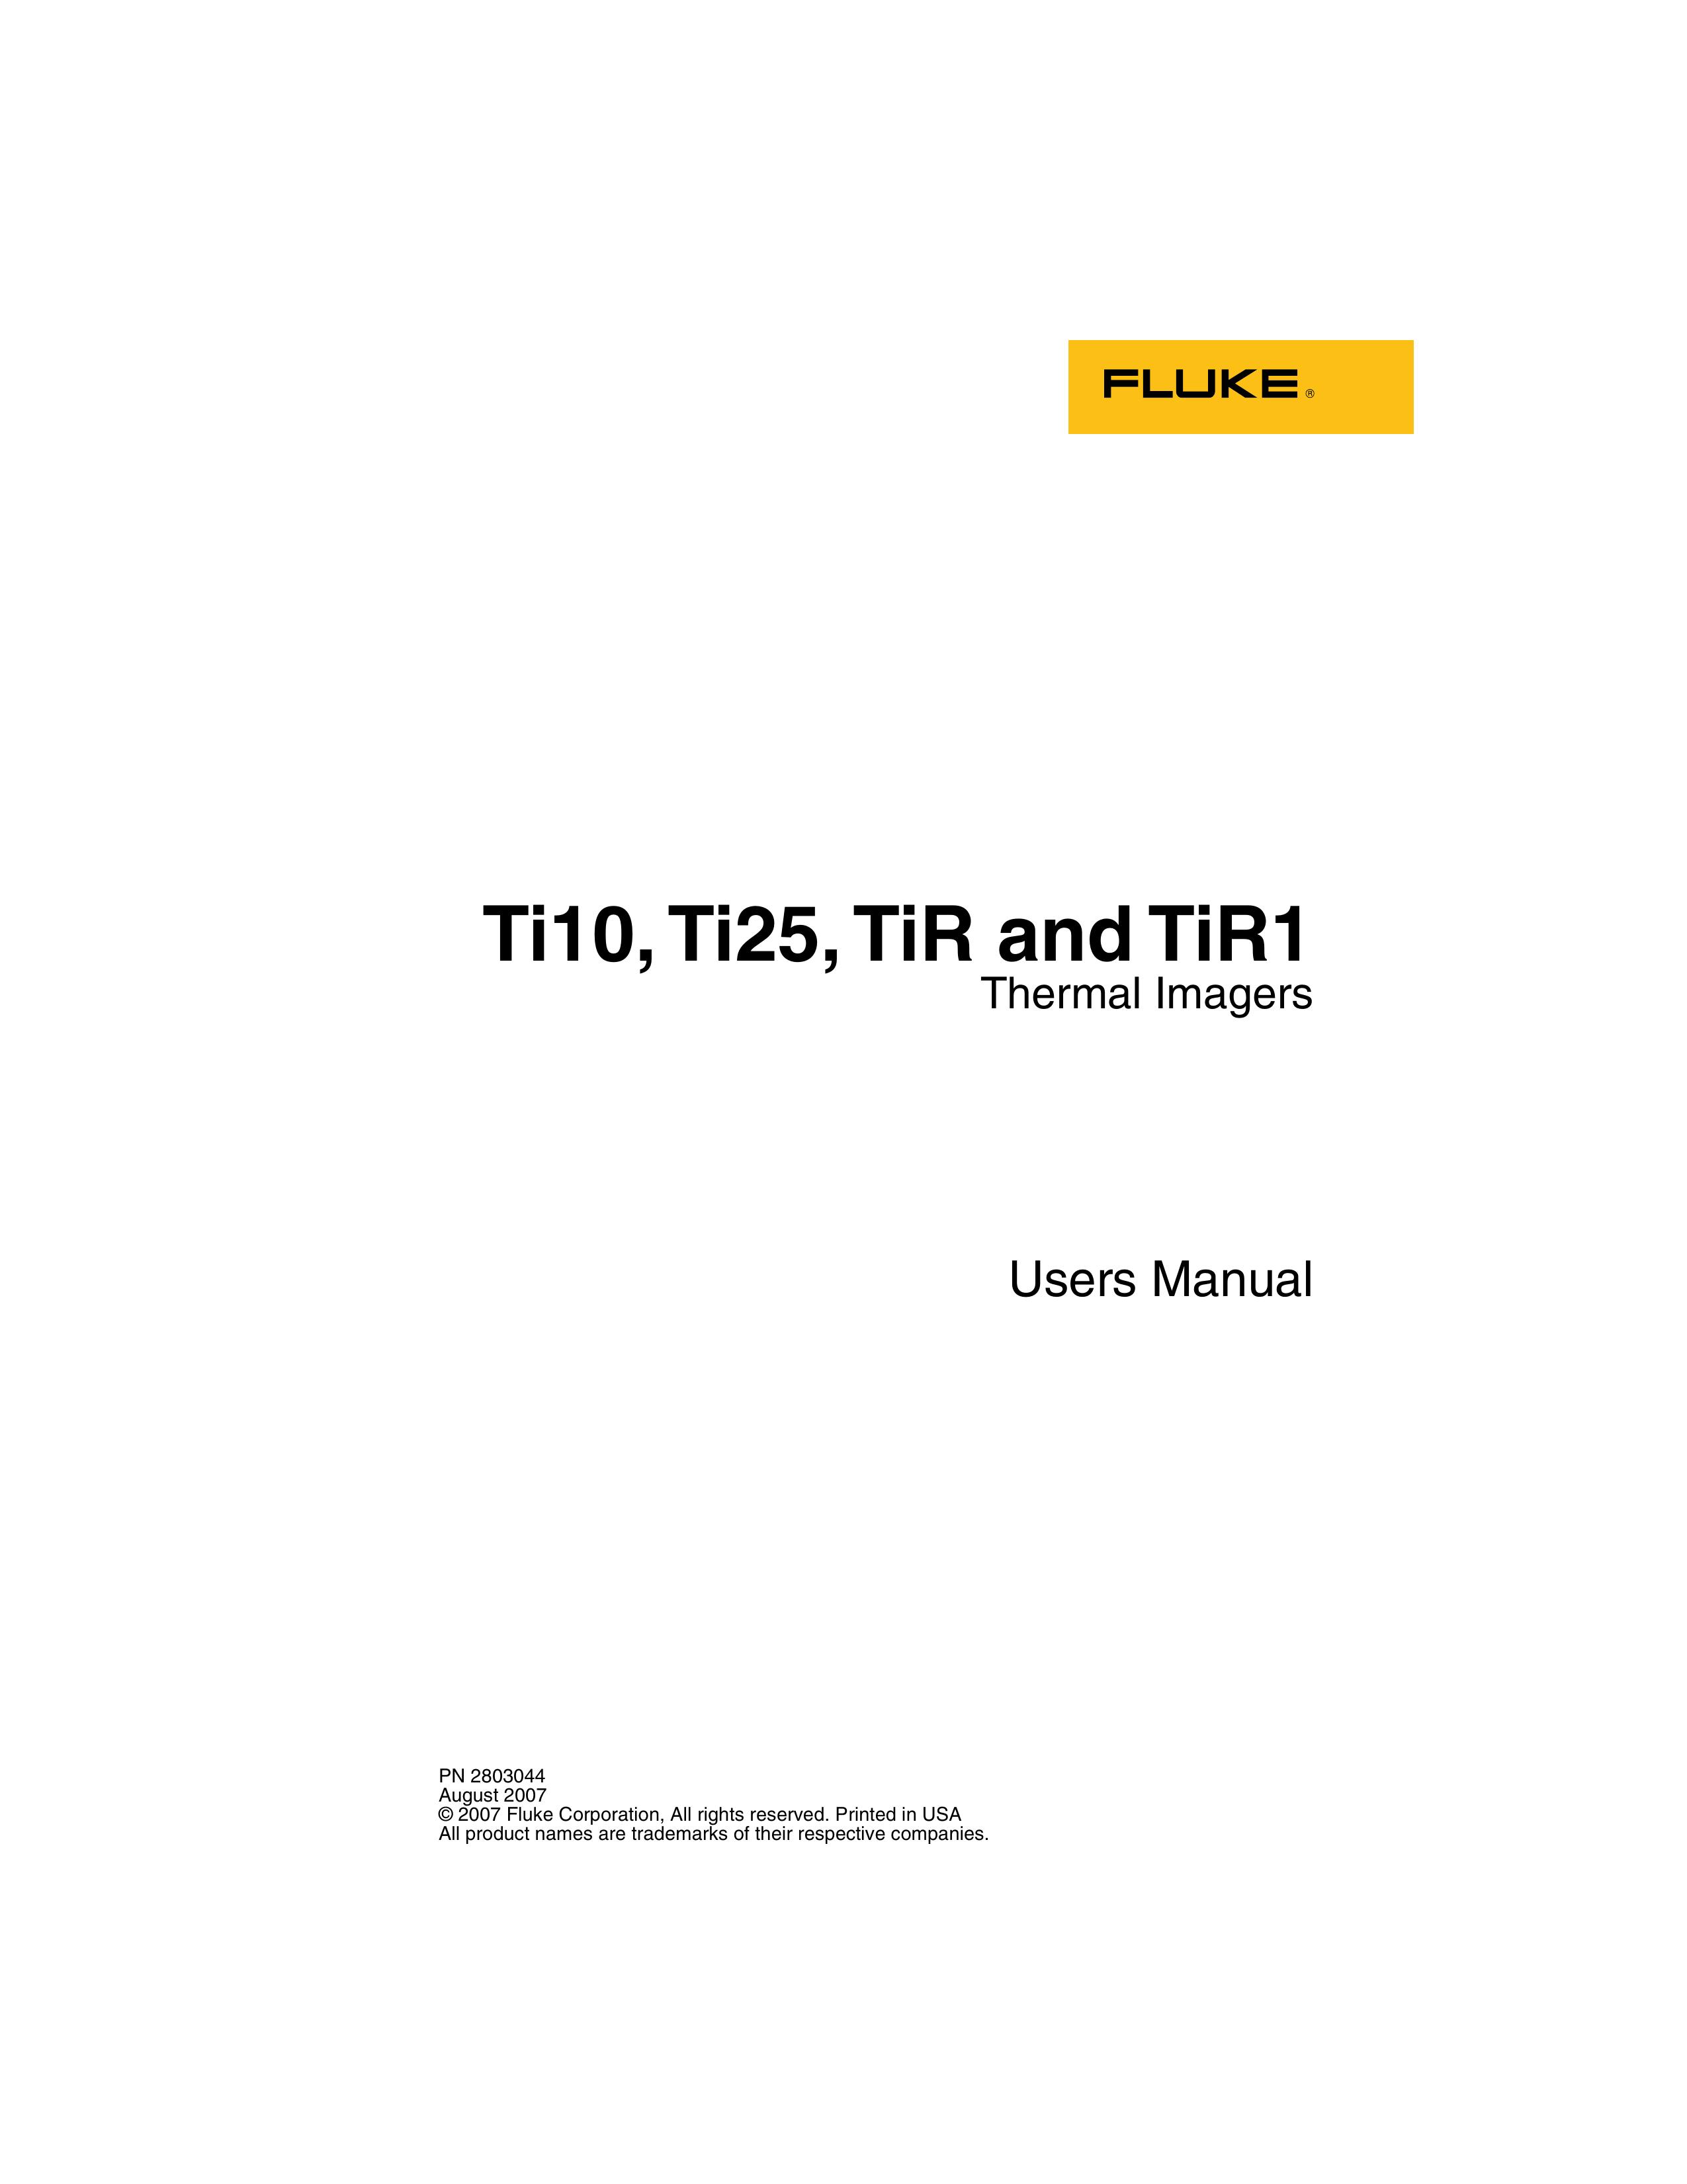 Fluke TiR1 Digital Camera User Manual